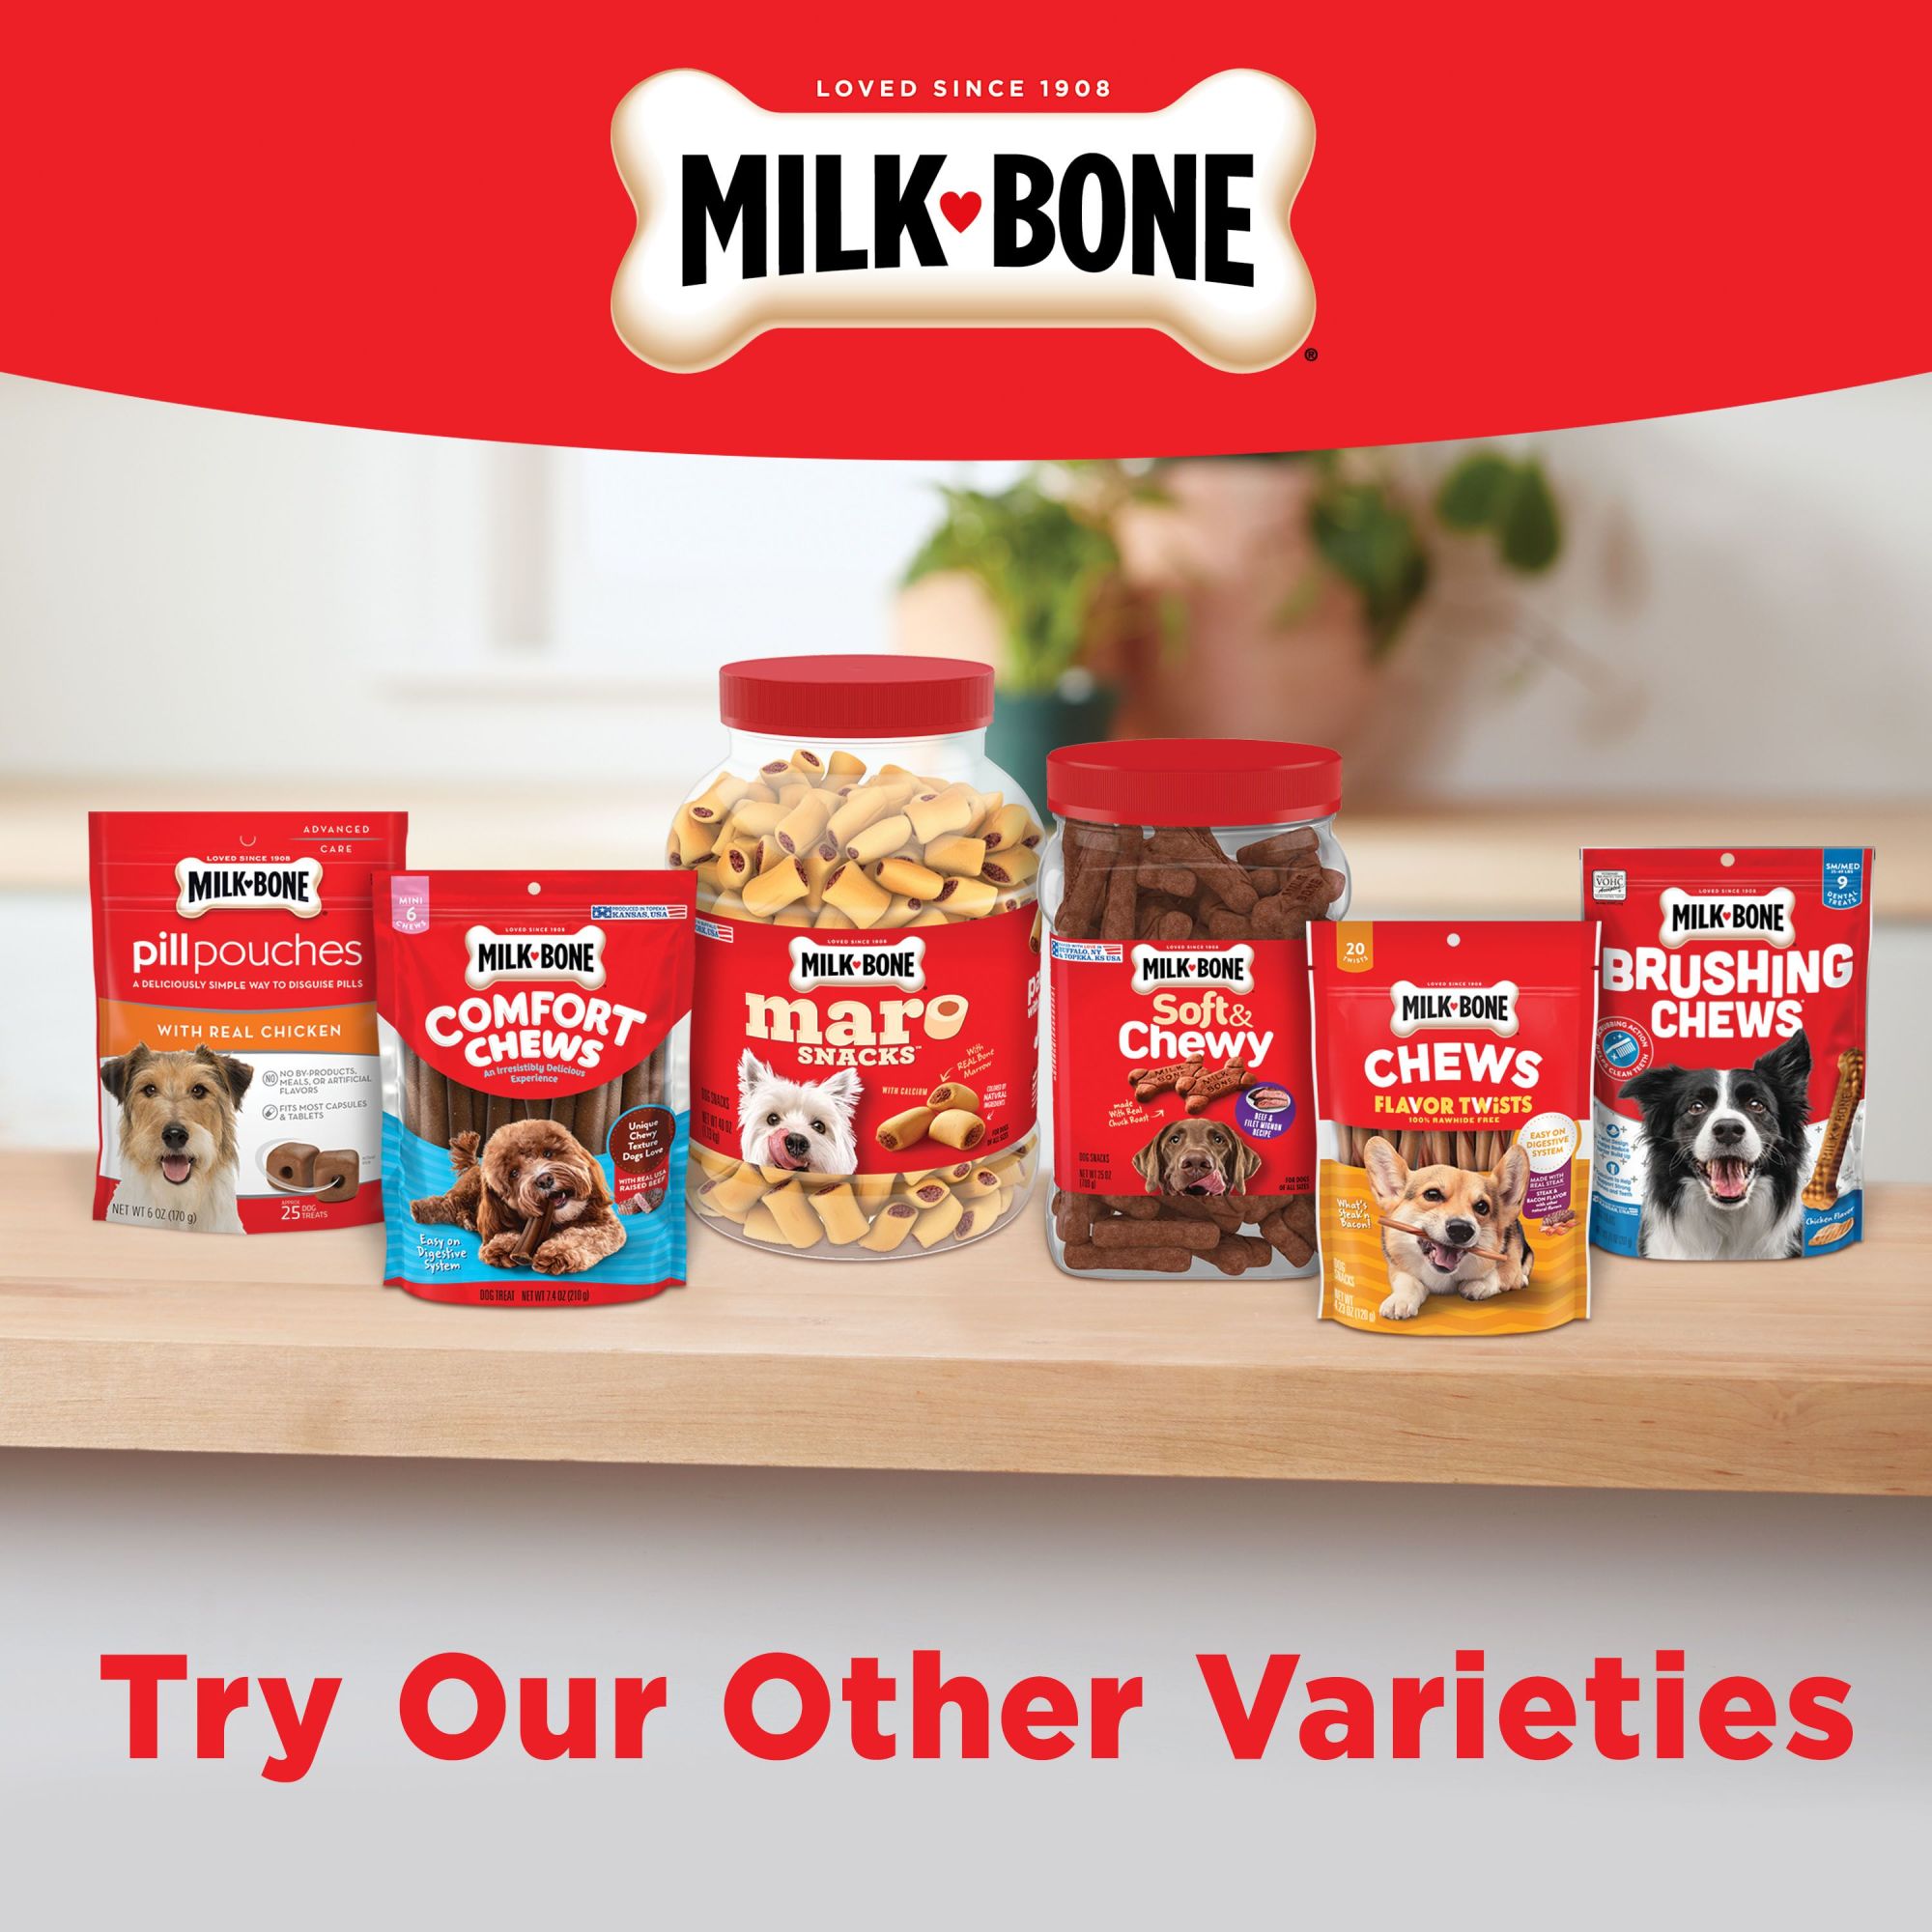 Milk-Bone Original Dog Biscuits, Medium Crunchy Dog Treats, 10 lbs. - image 8 of 10